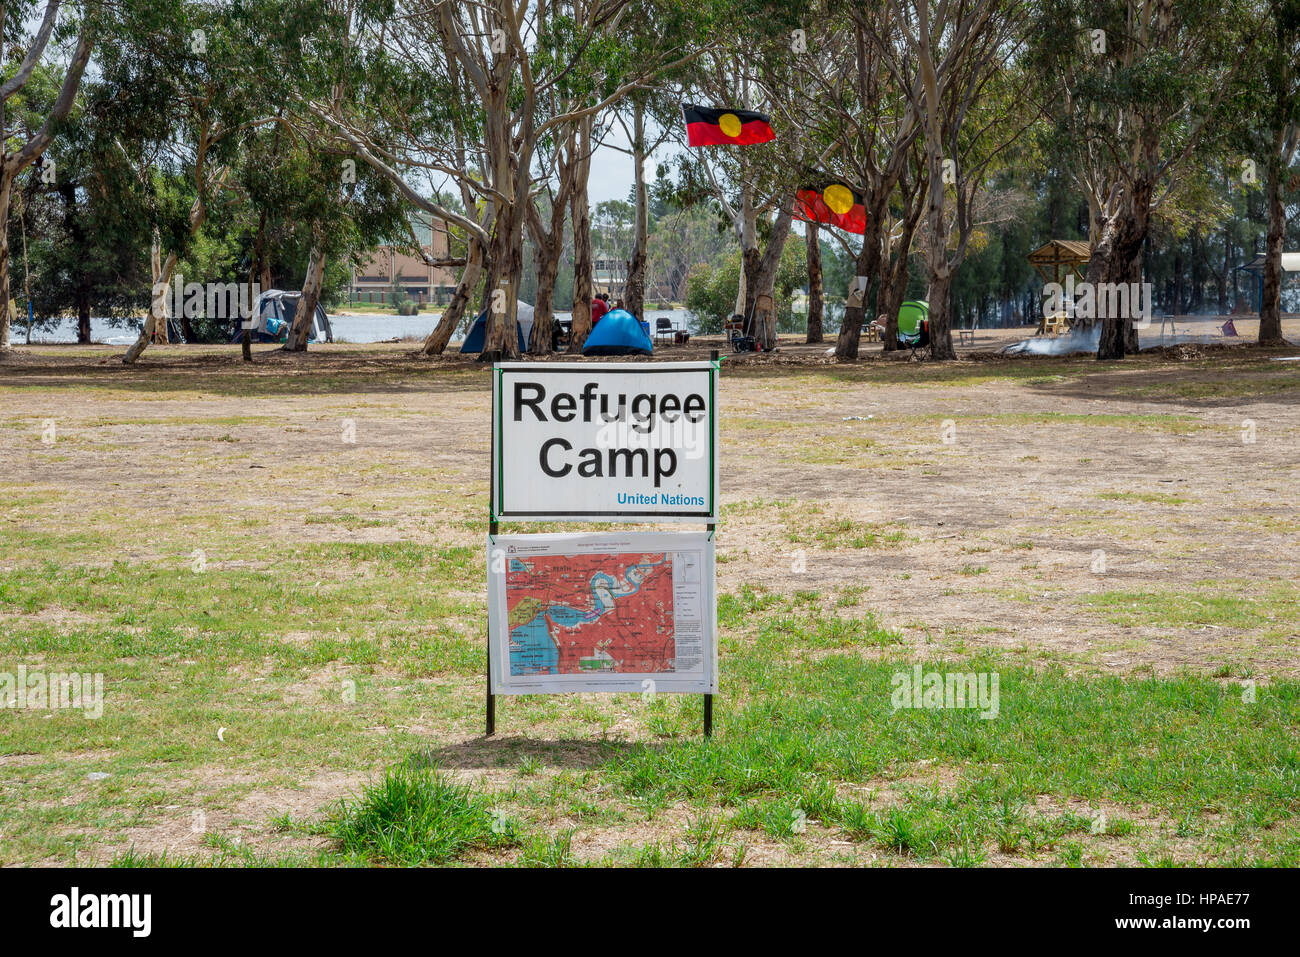 A Refugee Camp on Heirisson Island in Peth, Western Australia Stock Photo